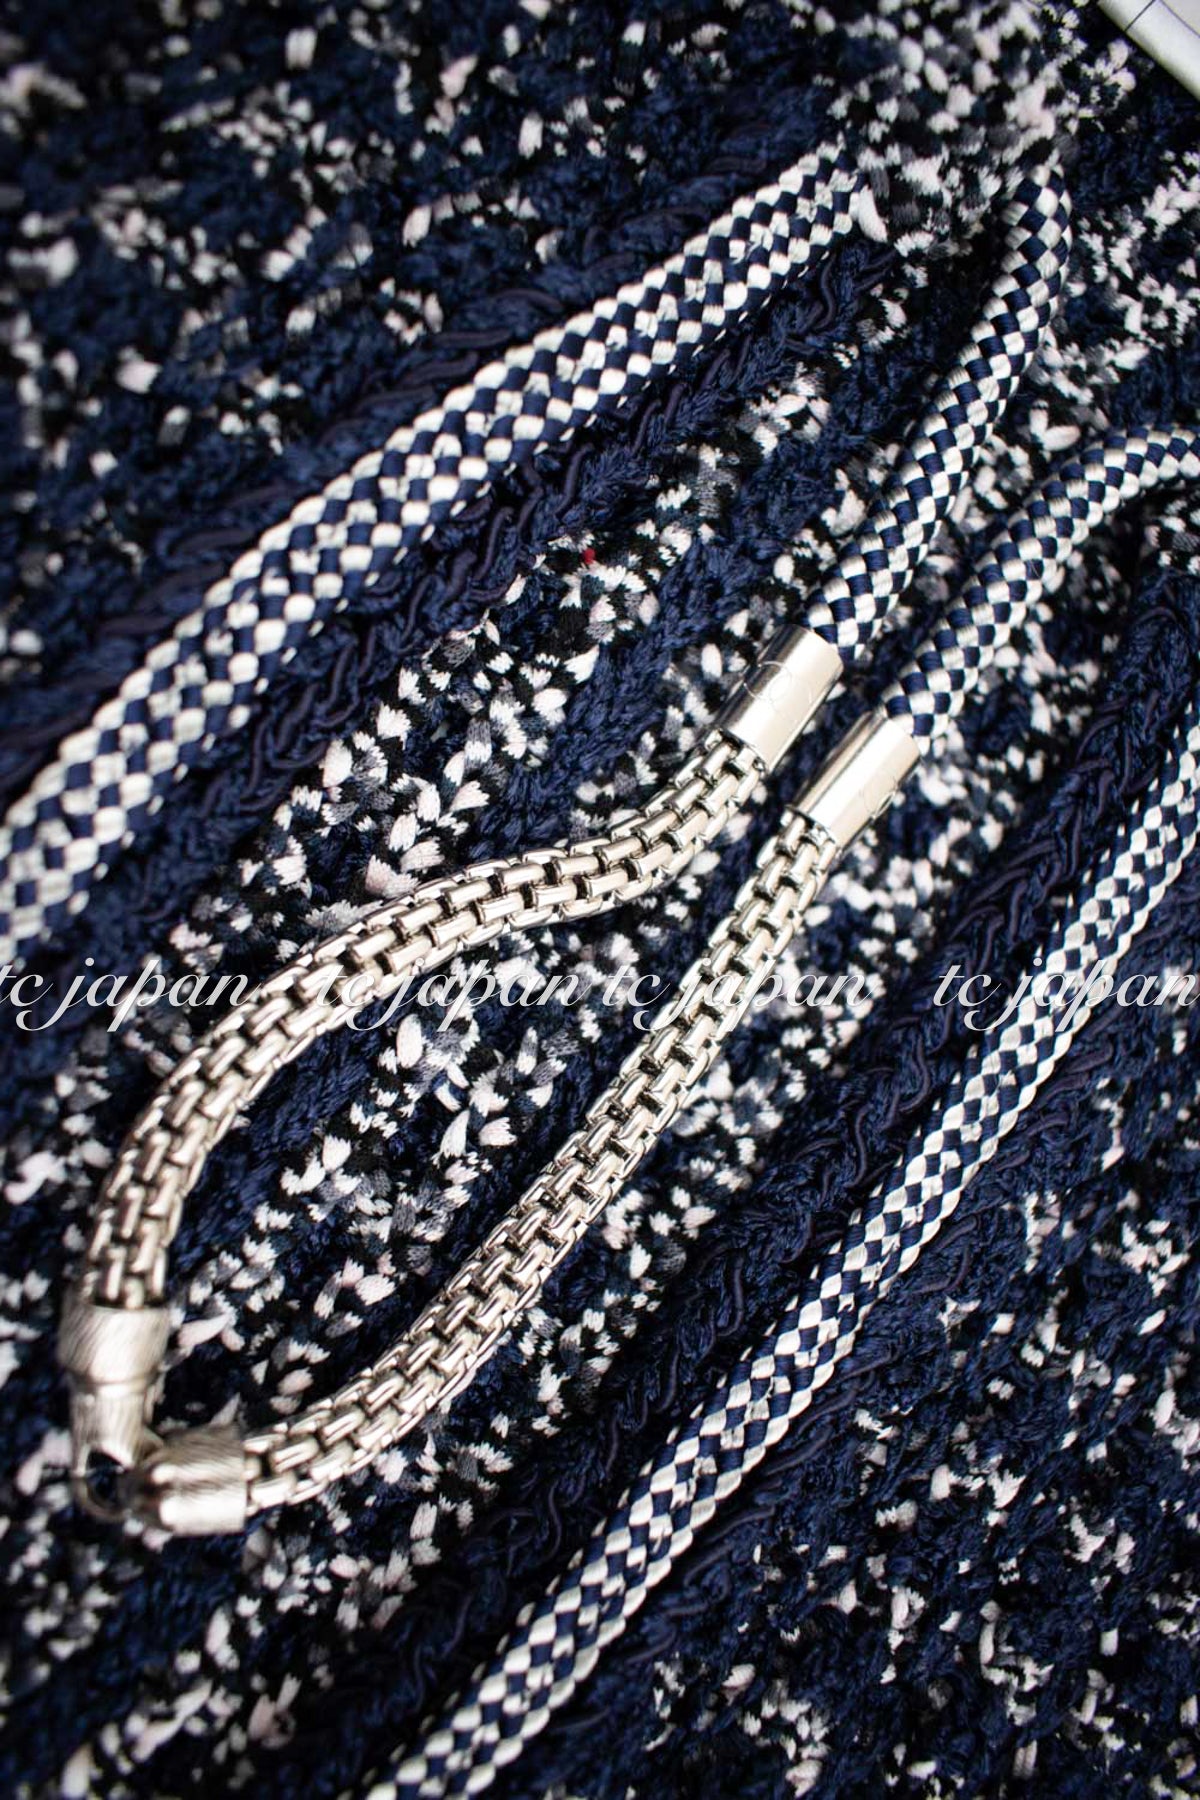 CHANEL 12S Pink Black Navy Chain Knit Cardigan 36 38 シャネル ピンク・ネイビー・ブラック・ニット・カーディガン 即発